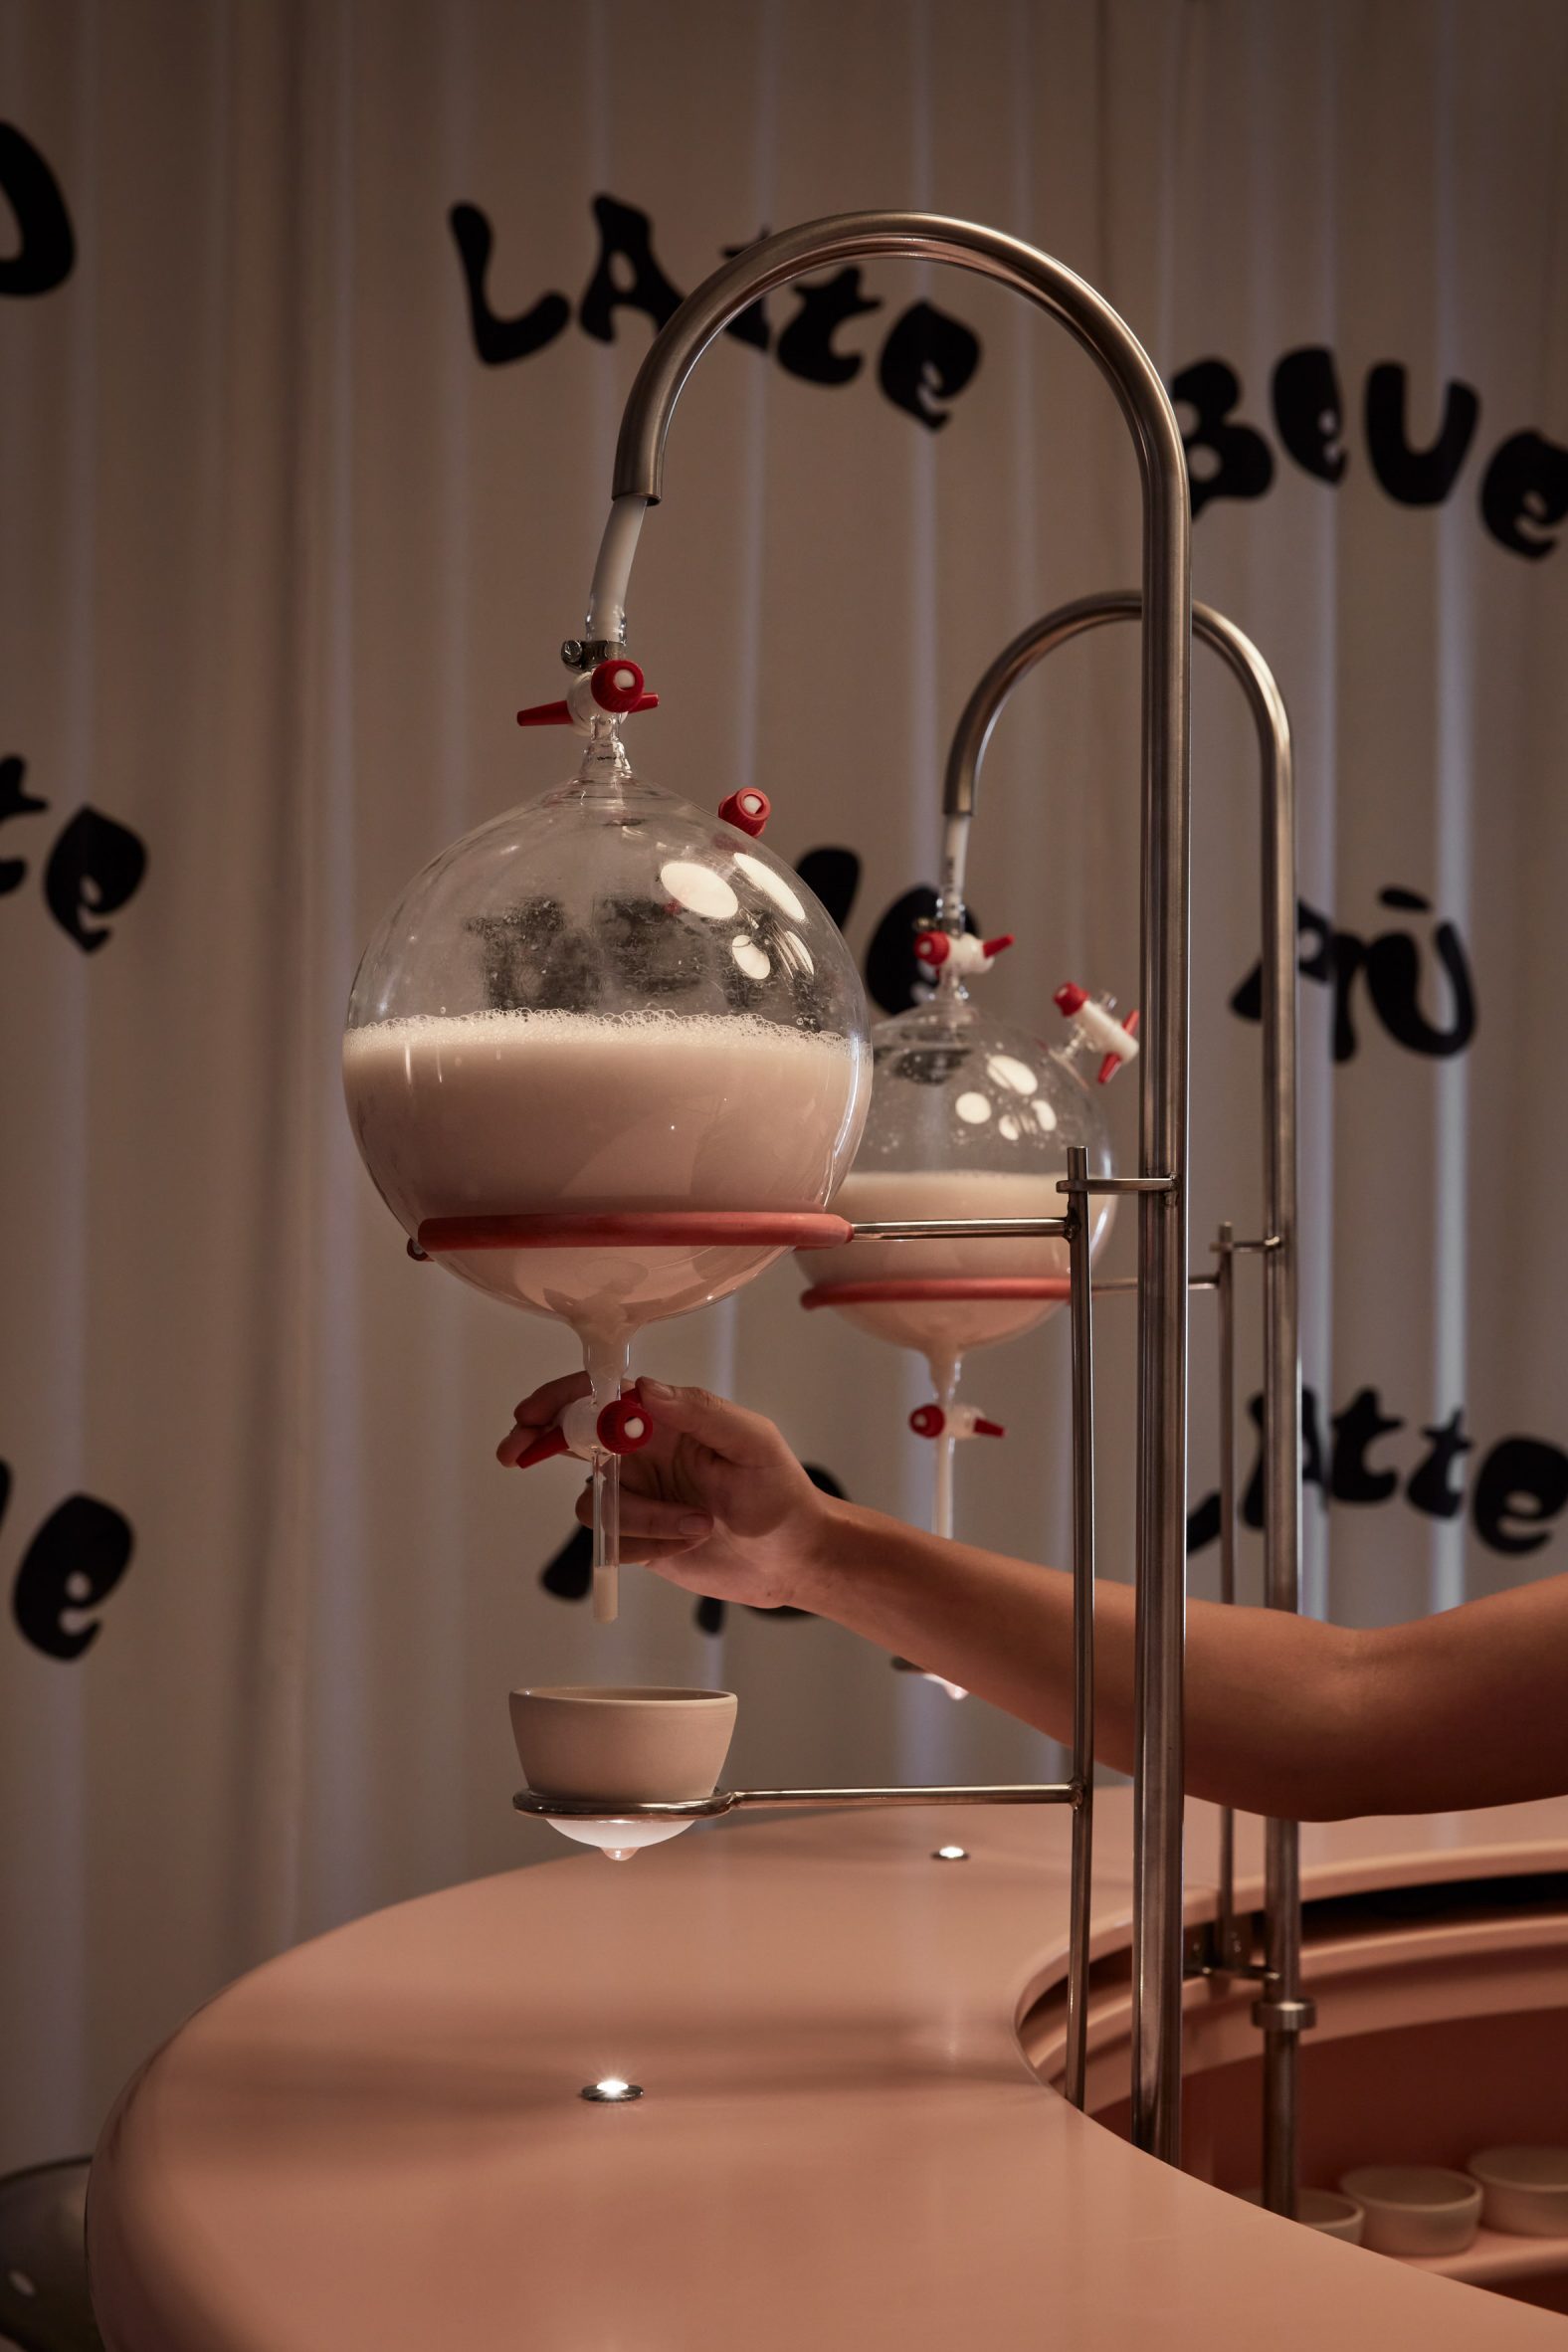 Hand pulling milk from circular beakers in installation by Lolita Gomez and Blanca Algarra Sanchez